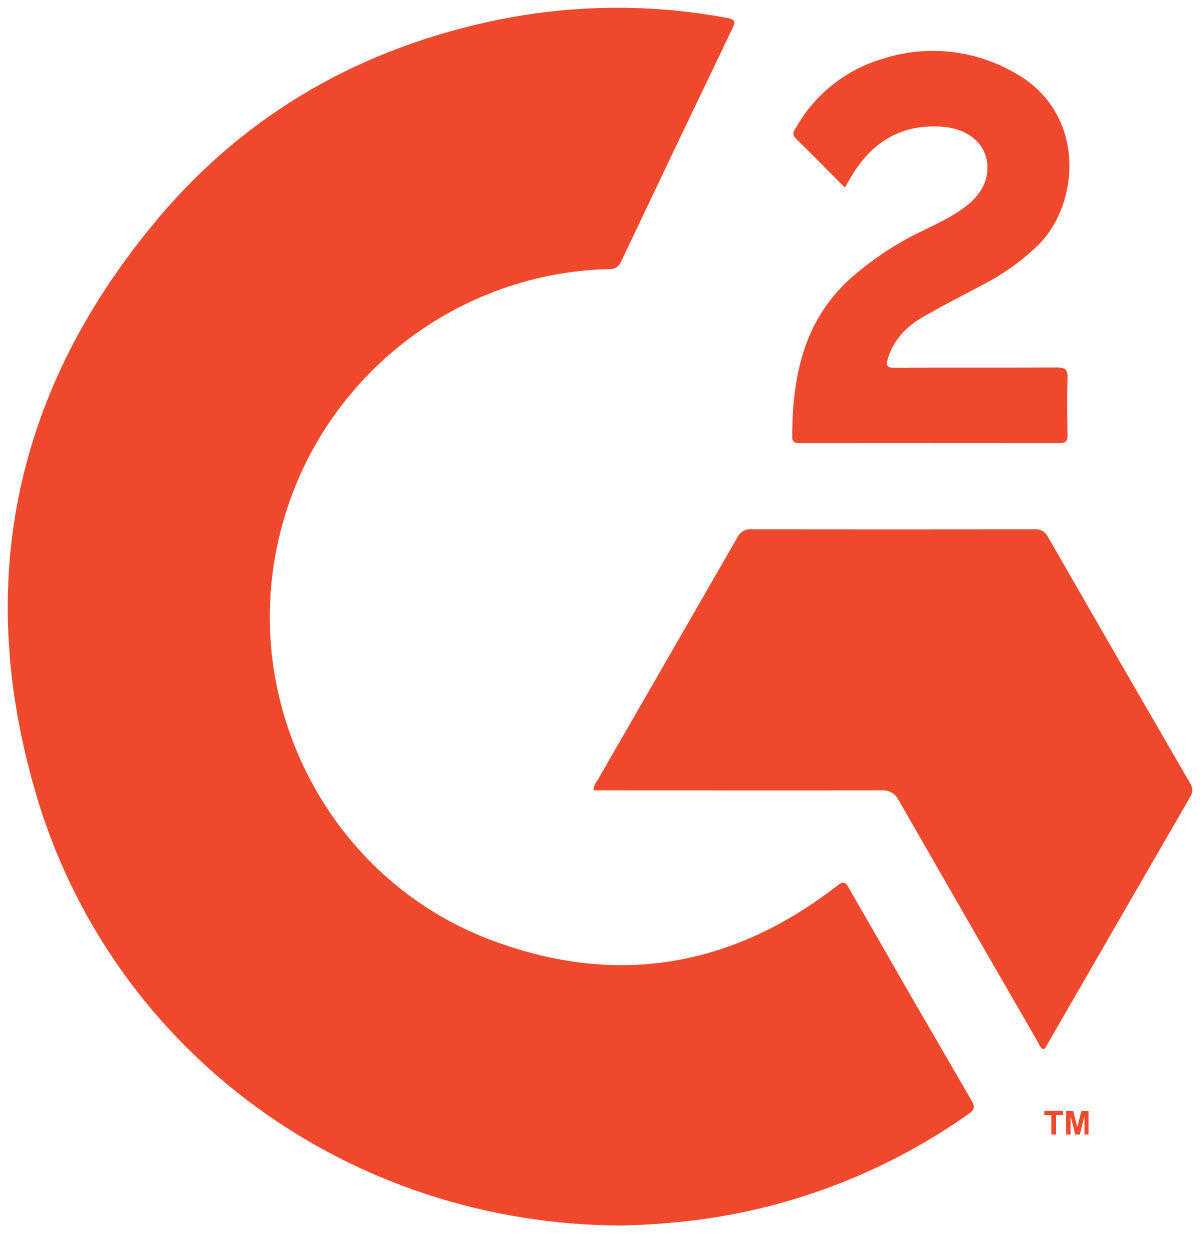 G2 logo.svg